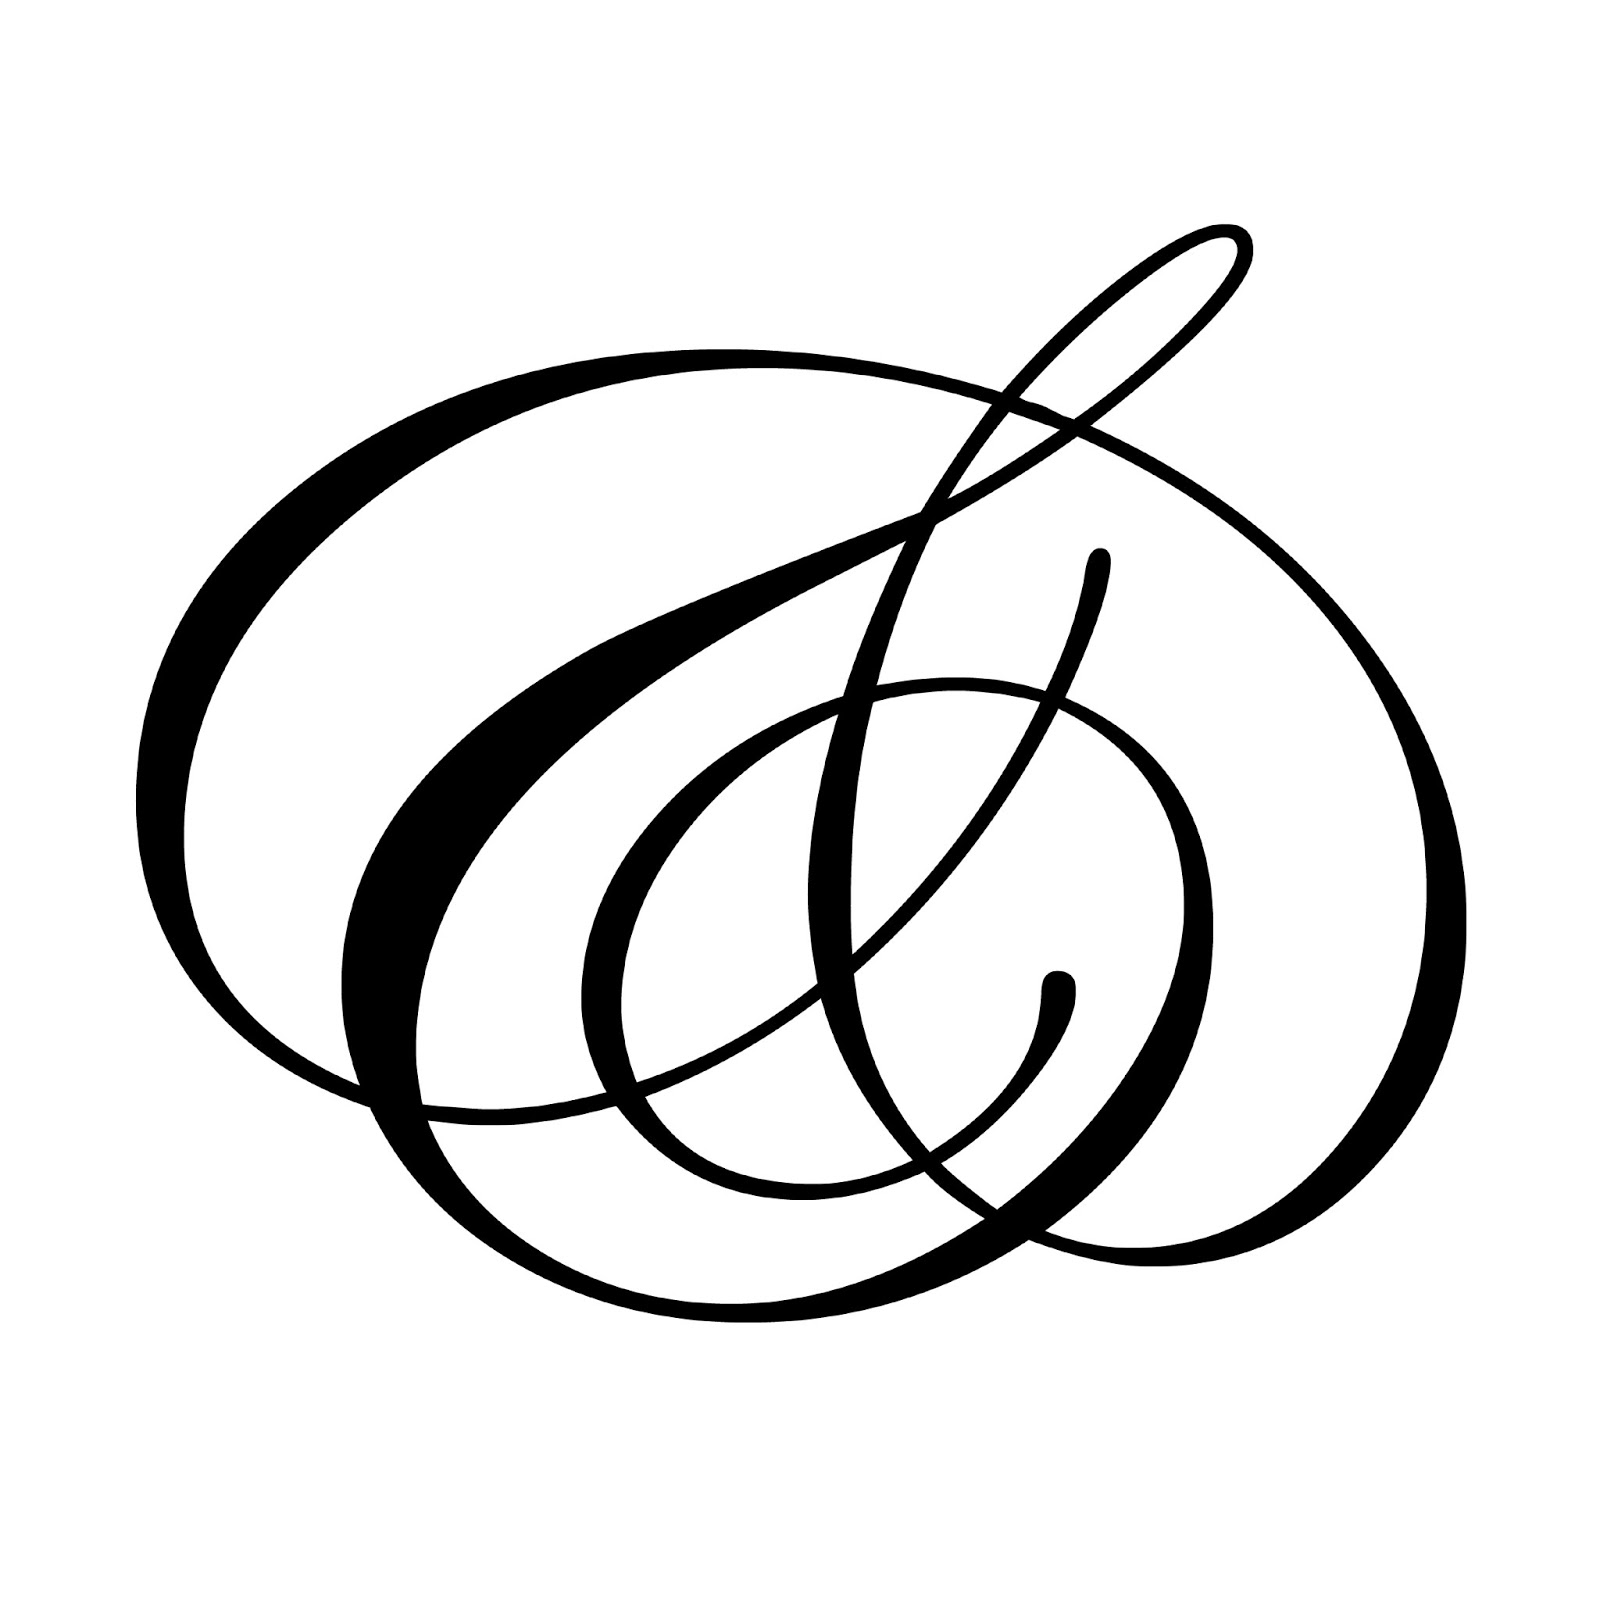 Ampersand Script | Free Images at Clker.com - vector clip art online ...